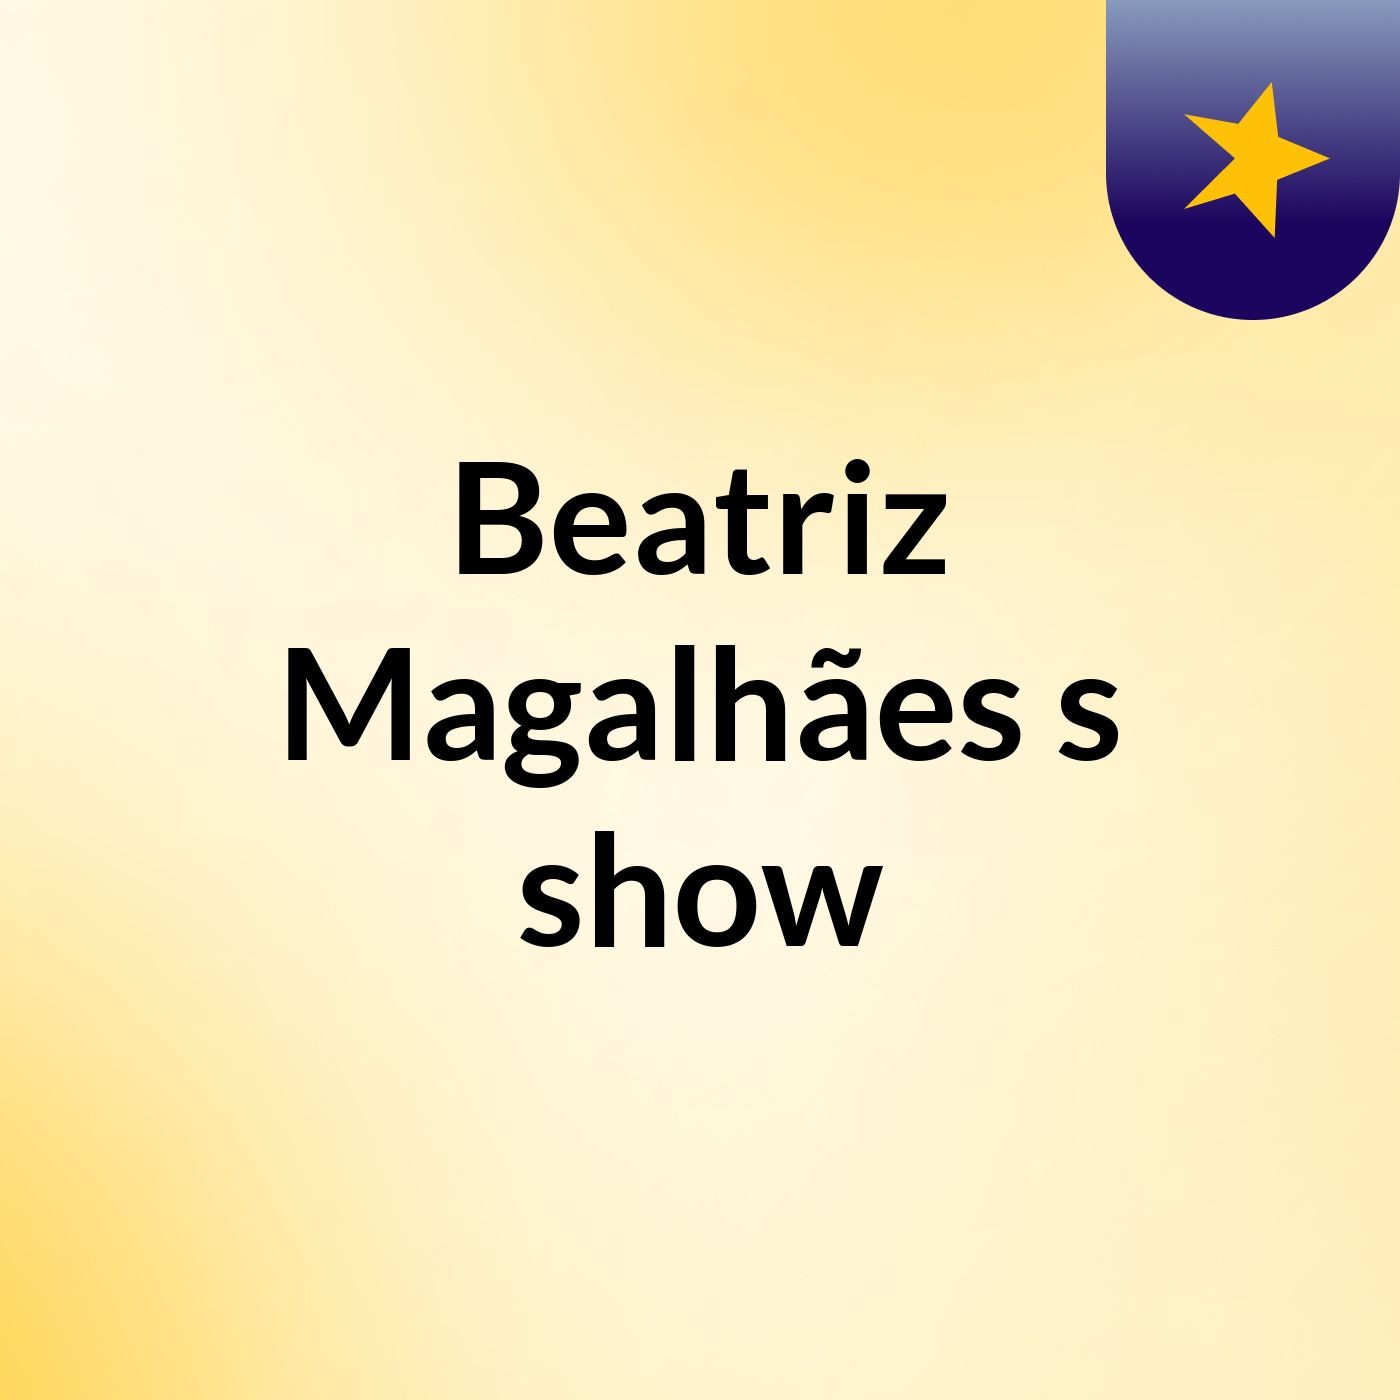 Beatriz Magalhães's show